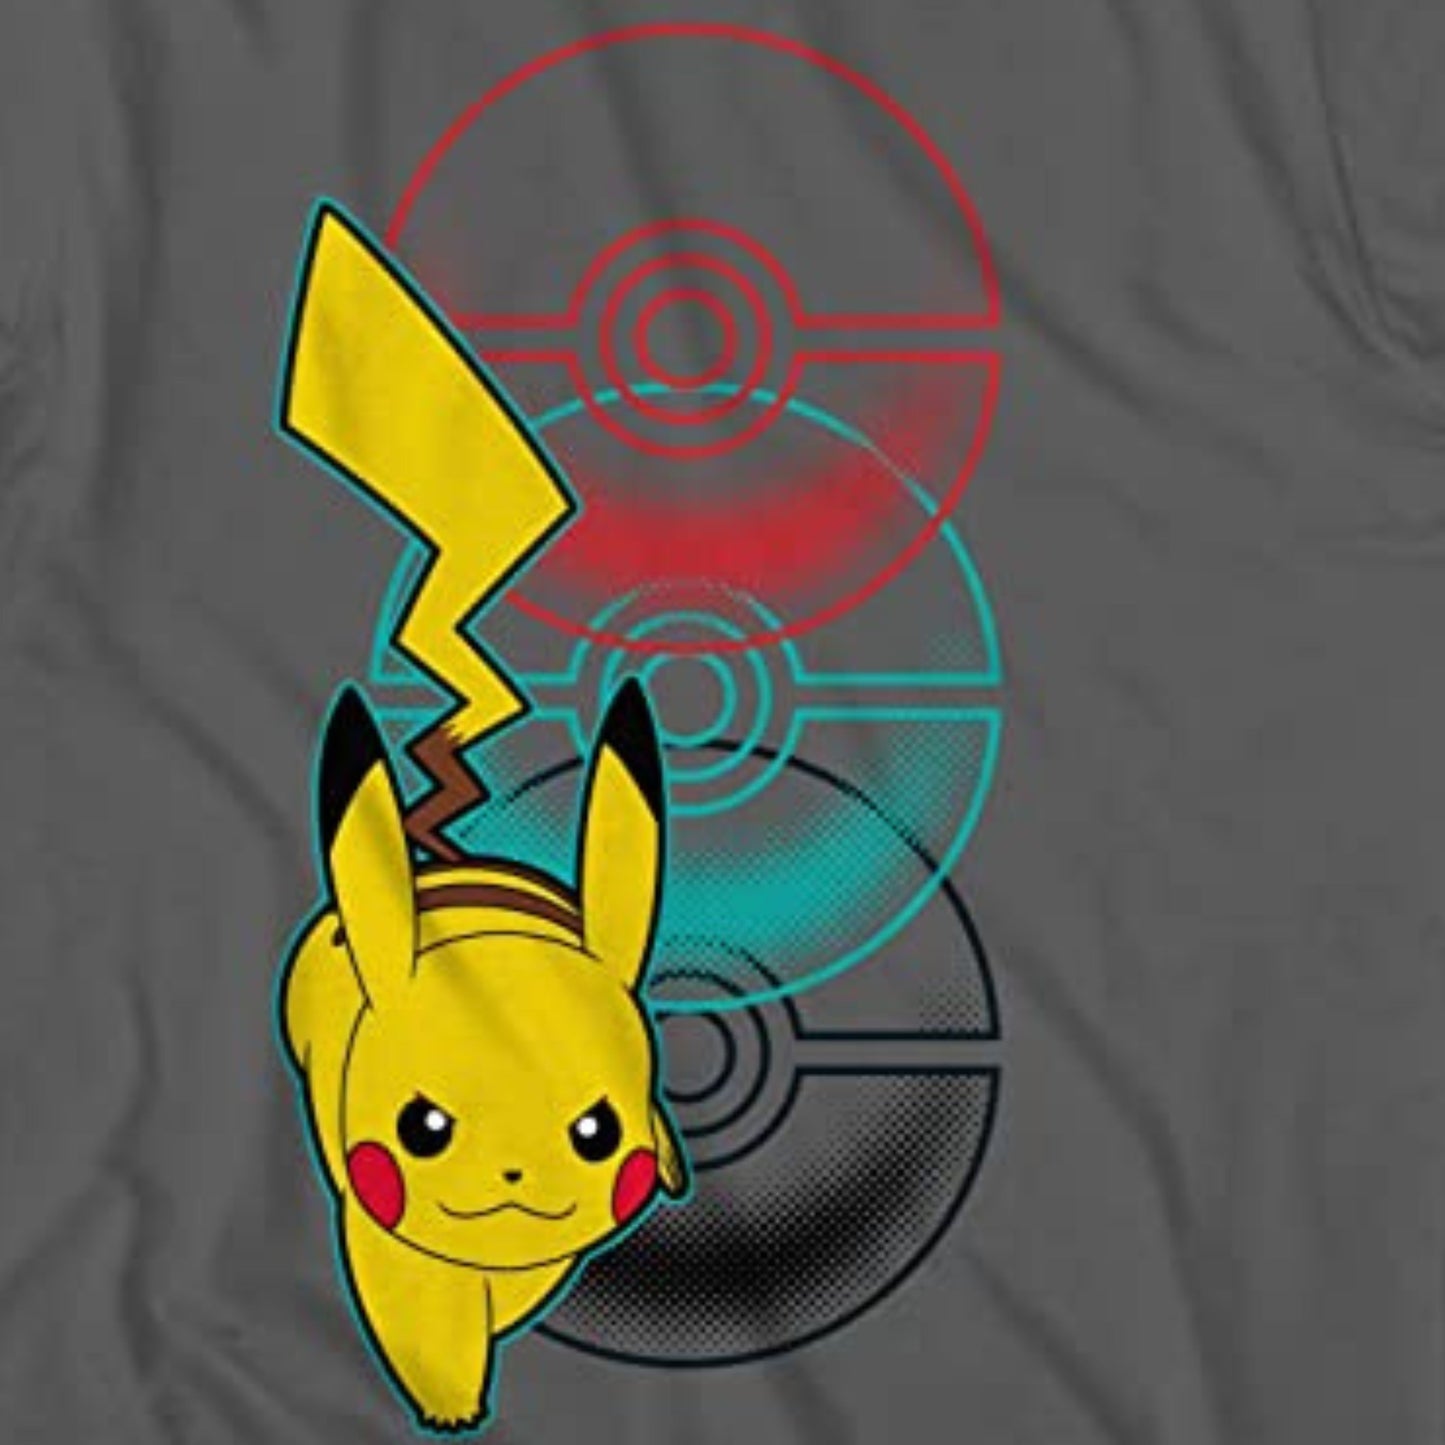 Pokemon Pikachu Big Boys Short Sleeve T-Shirt - Pikachu Lightning Energy Bounce